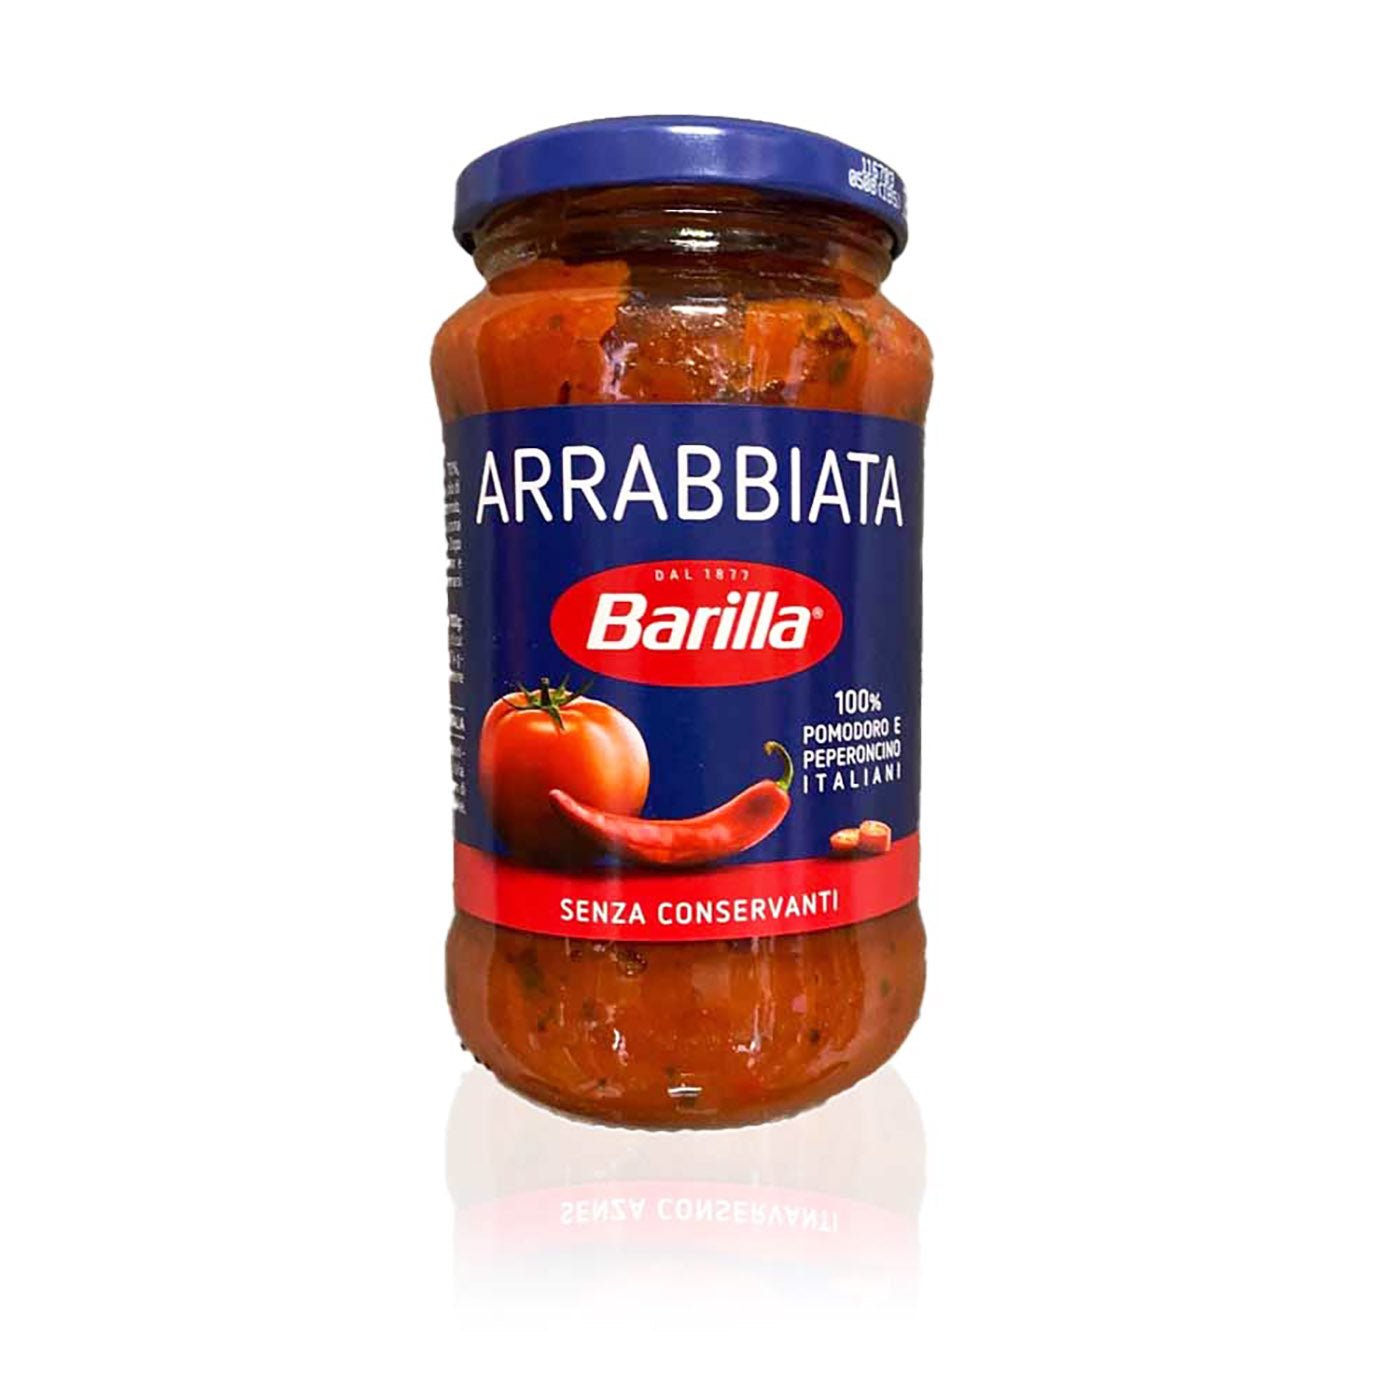 BARILLA - Arrabbiata -0,4kg - italienisch-einkaufen.de